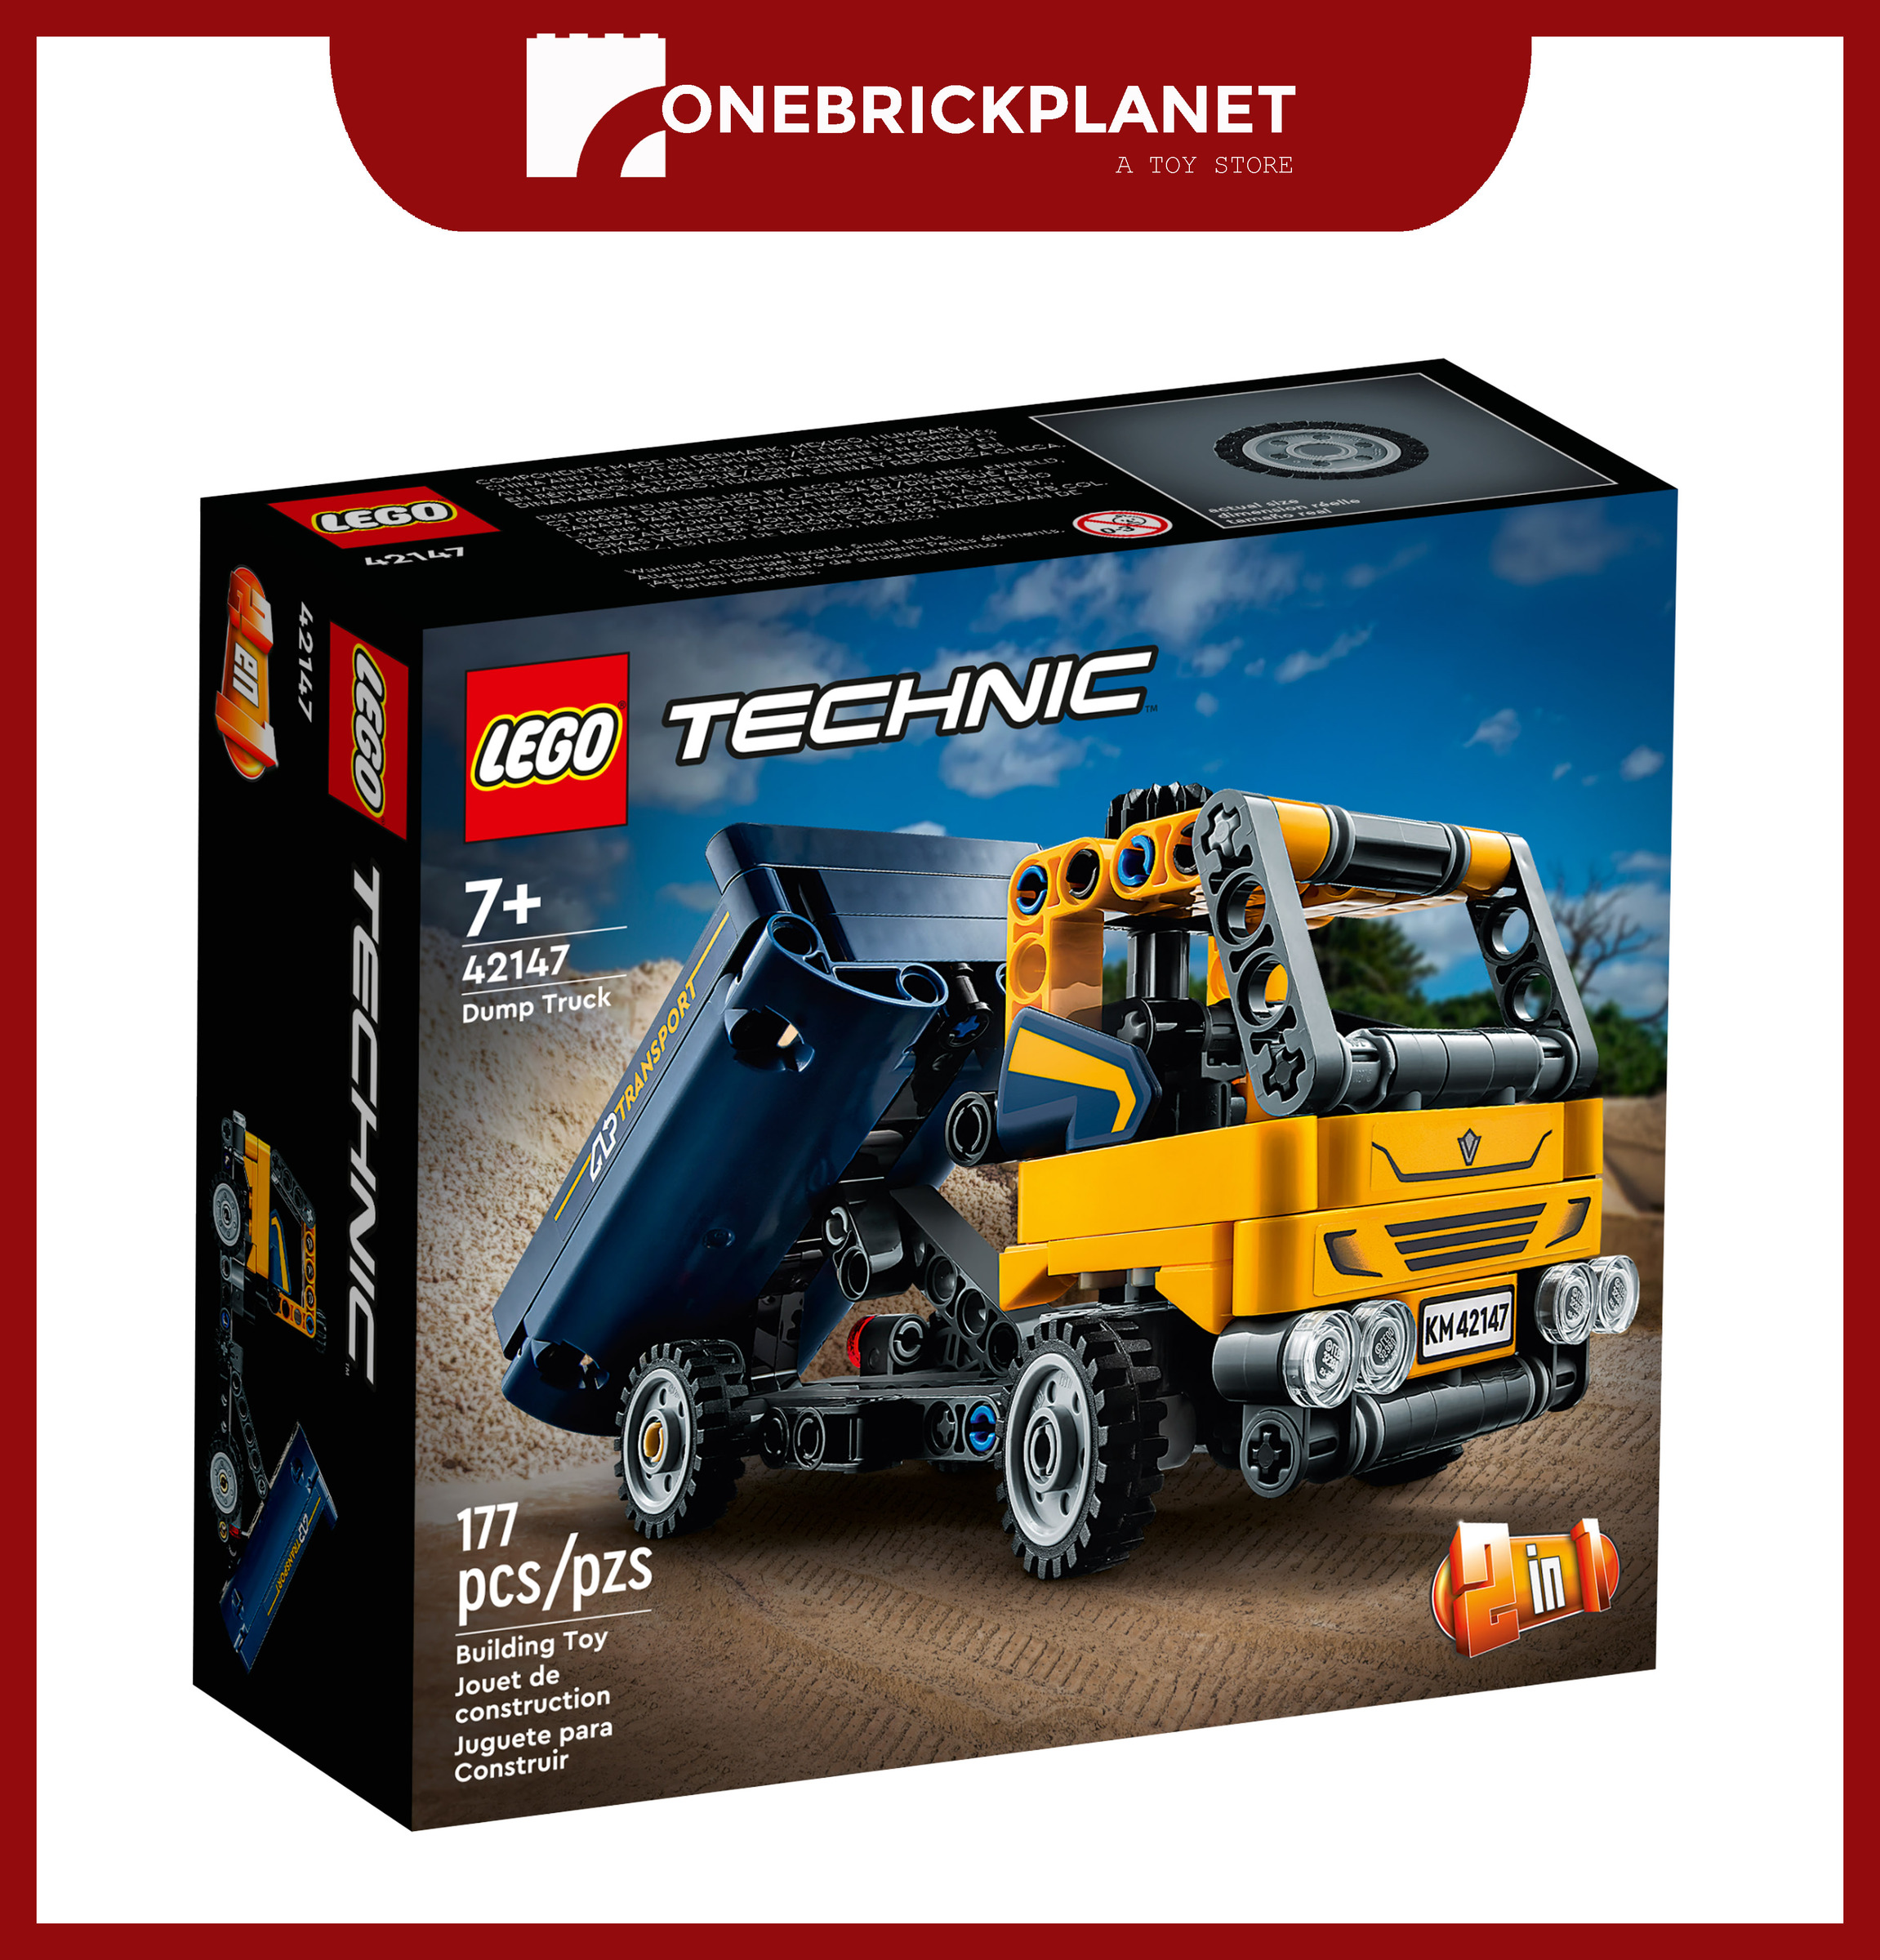 LEGO Technic 42147 - Dump Truck – One Brick Planet